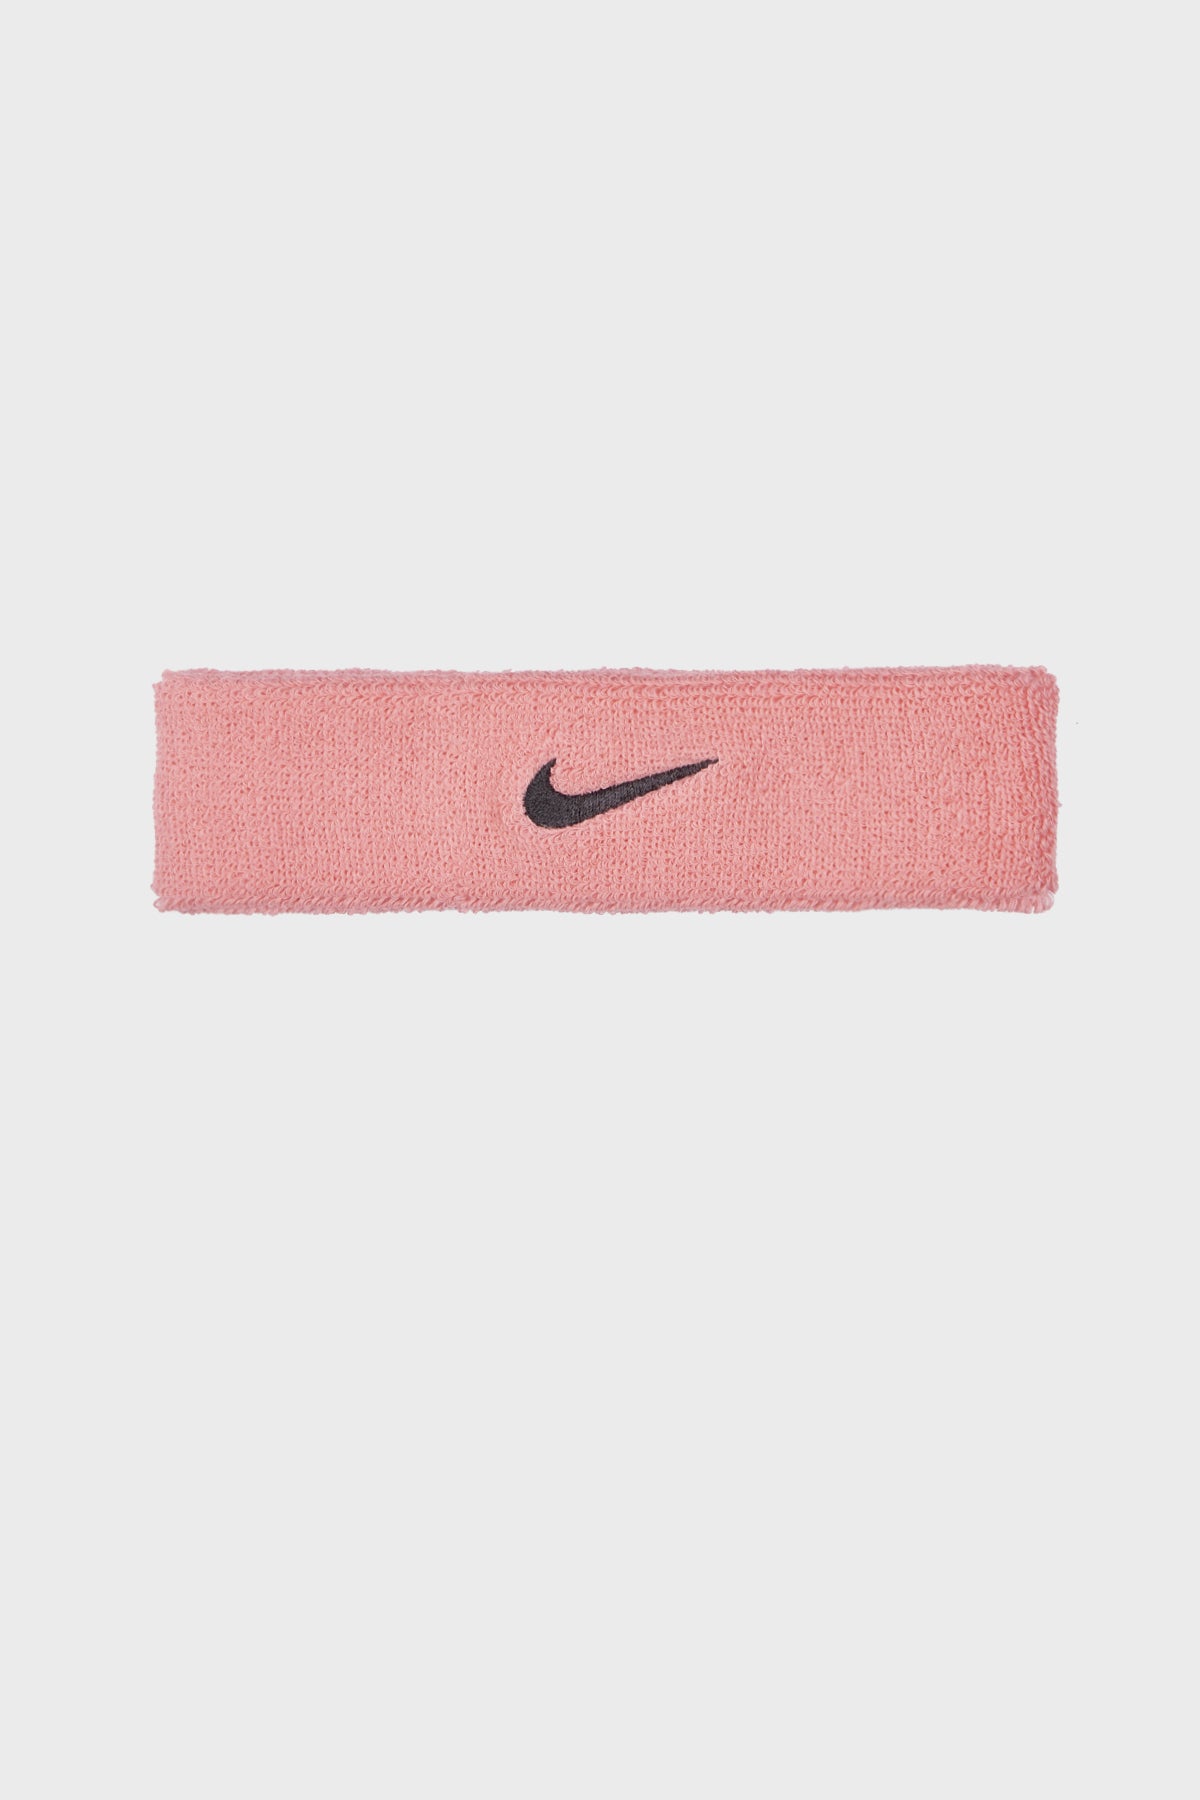 Nike - swoosh headband